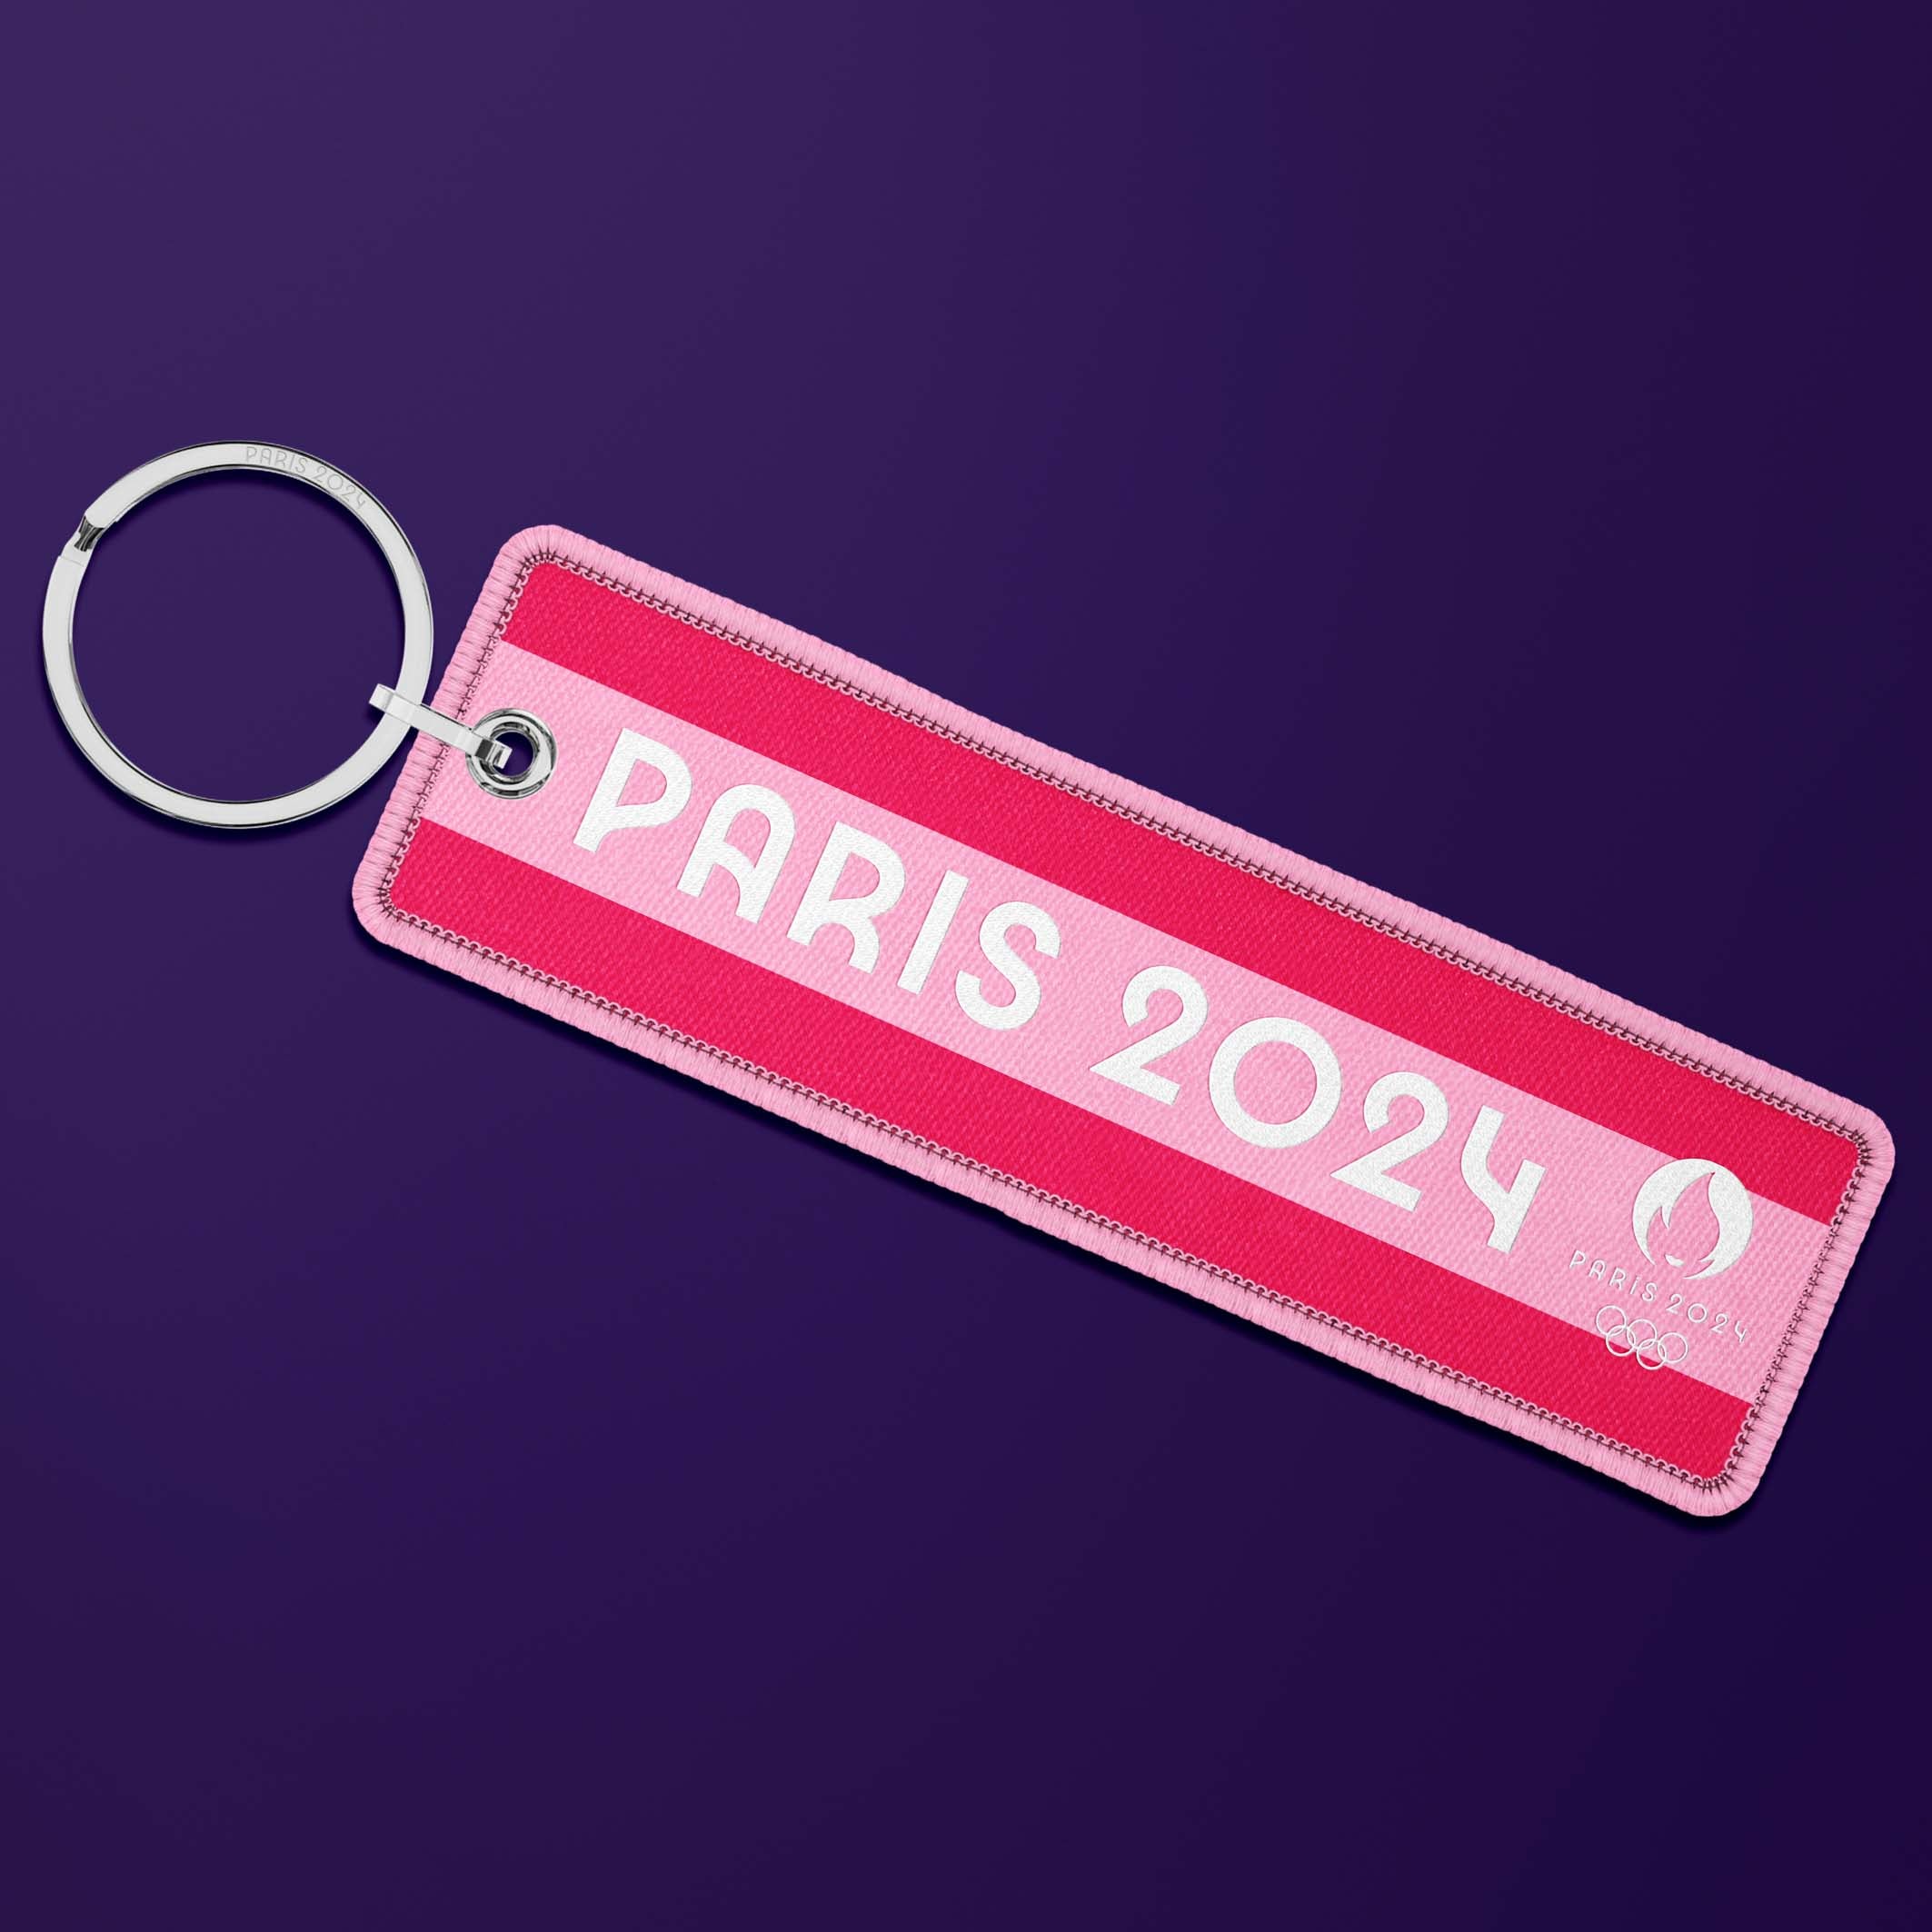 Paris 2024 Sports &amp; Stripes flame key ring - Football